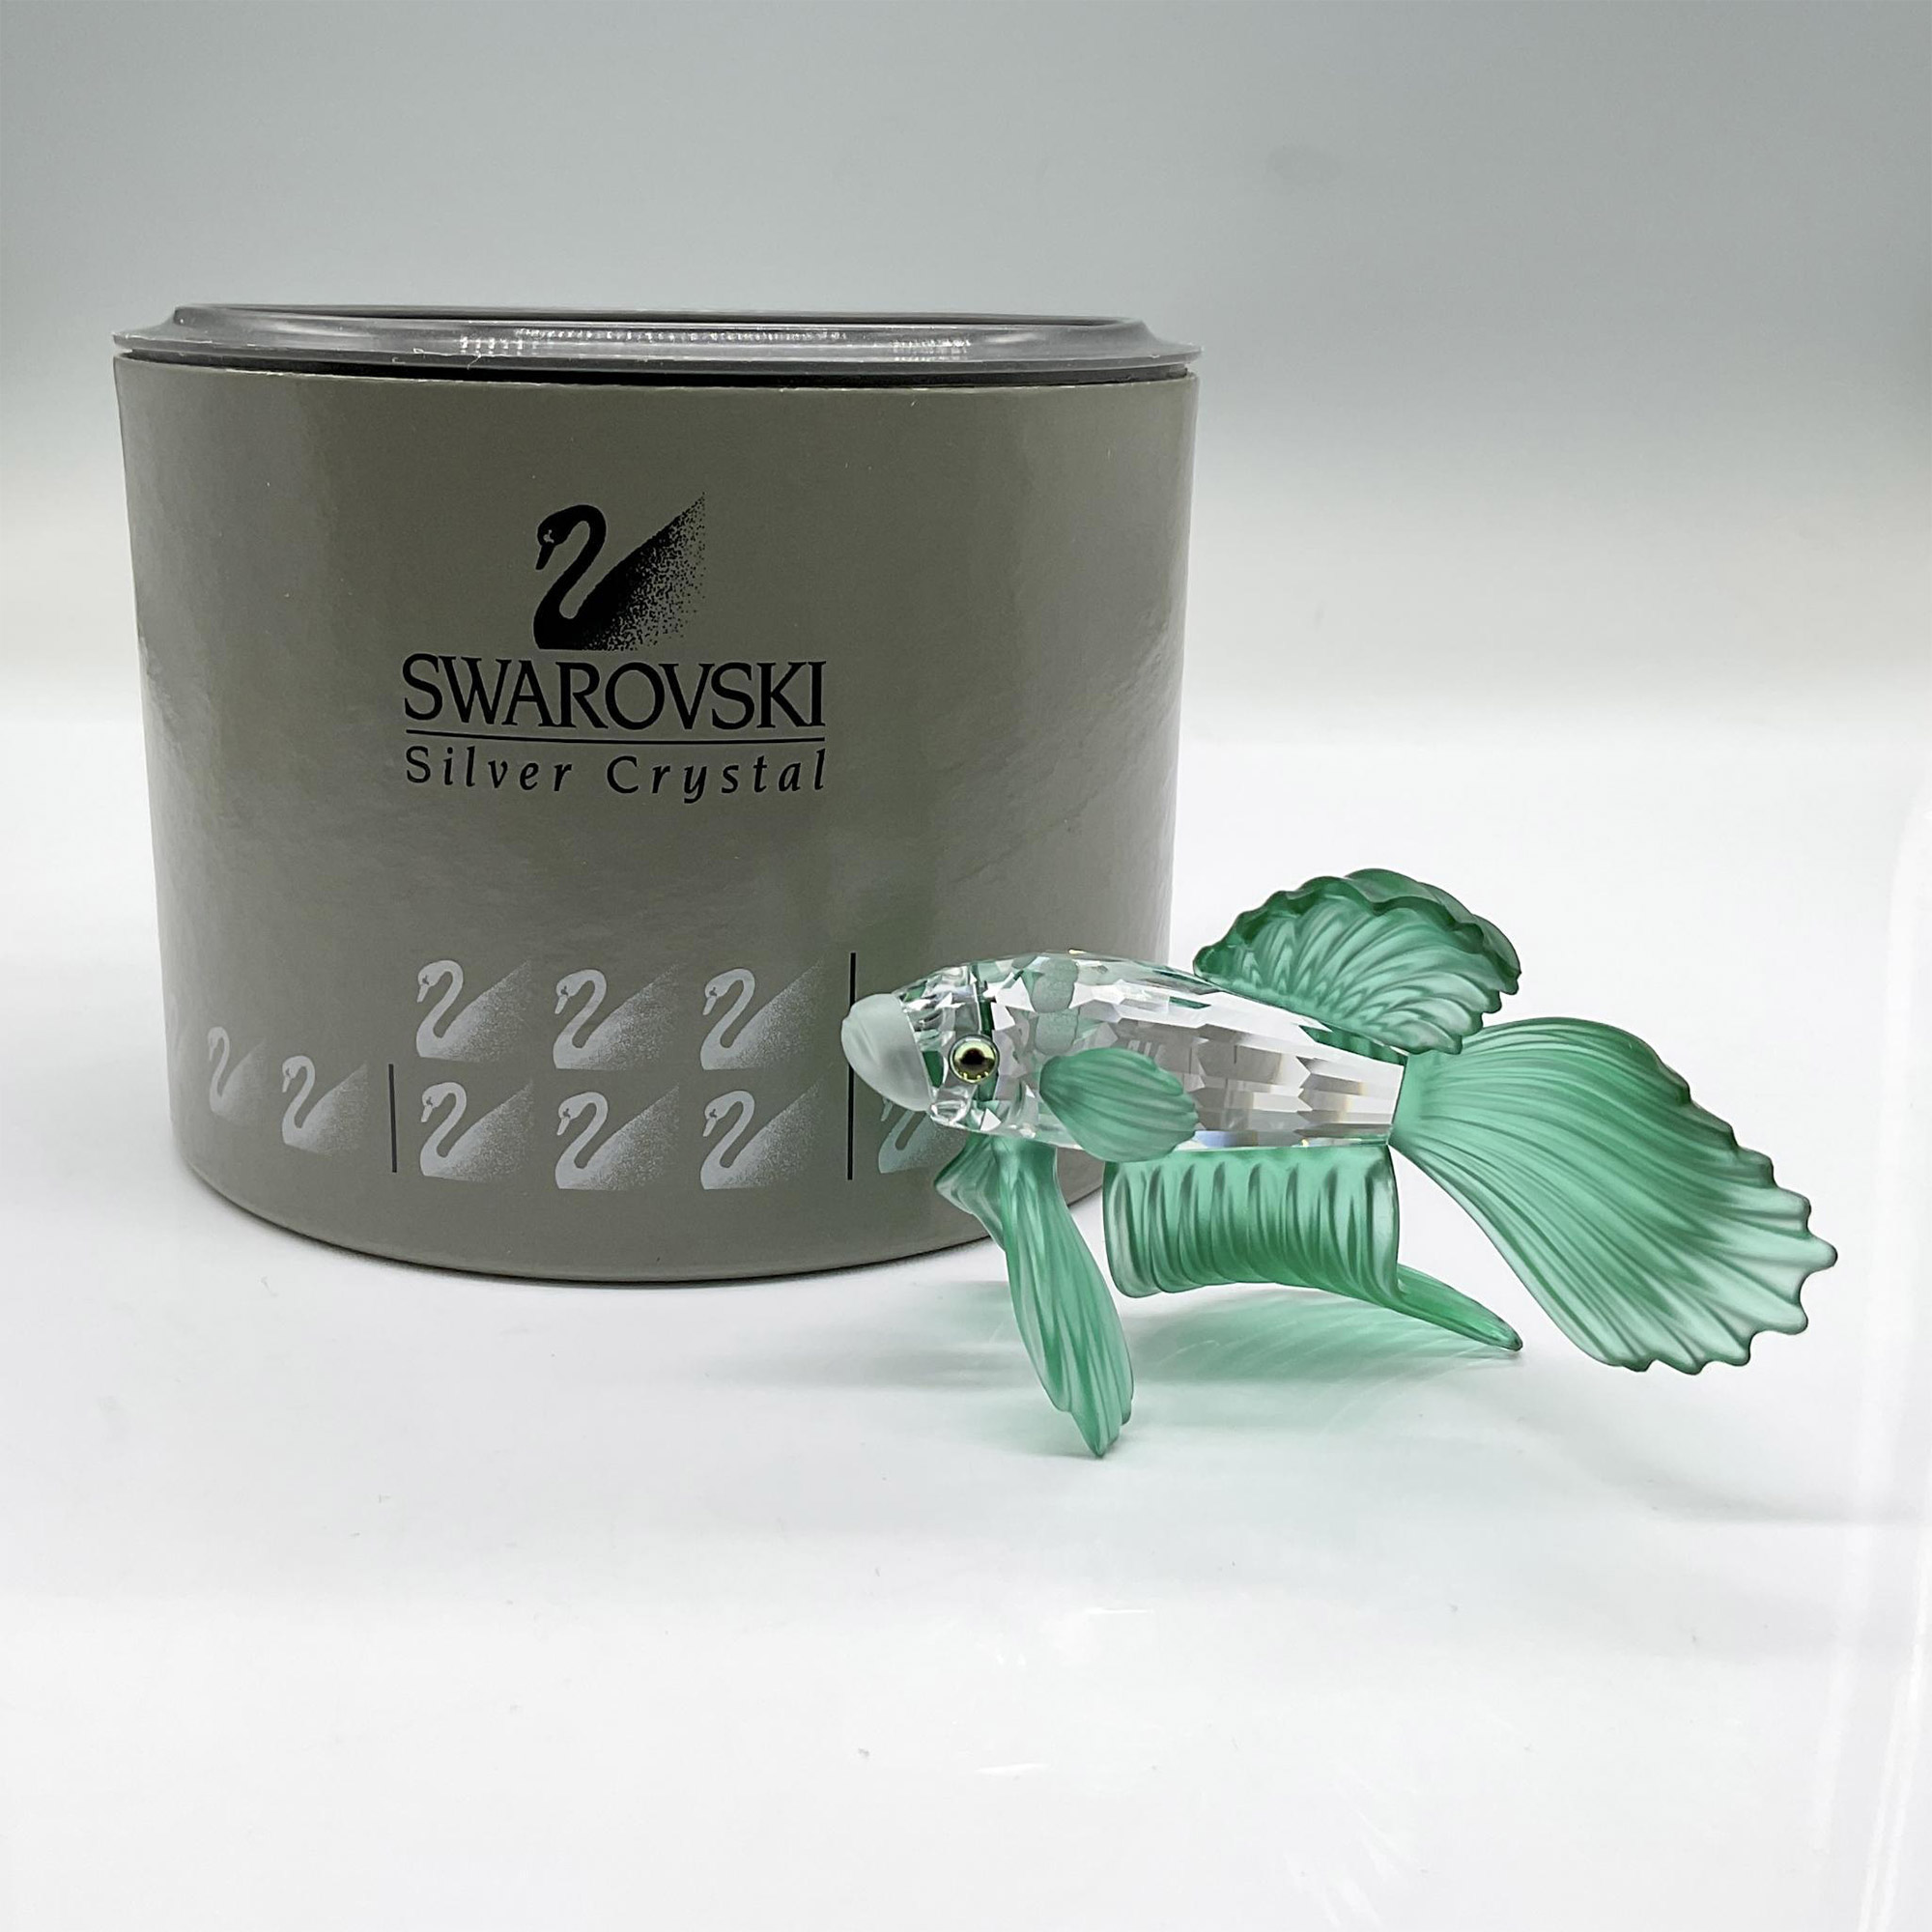 Swarovski Crystal Figurine, Green Siamese Fighting Fish - Image 4 of 4